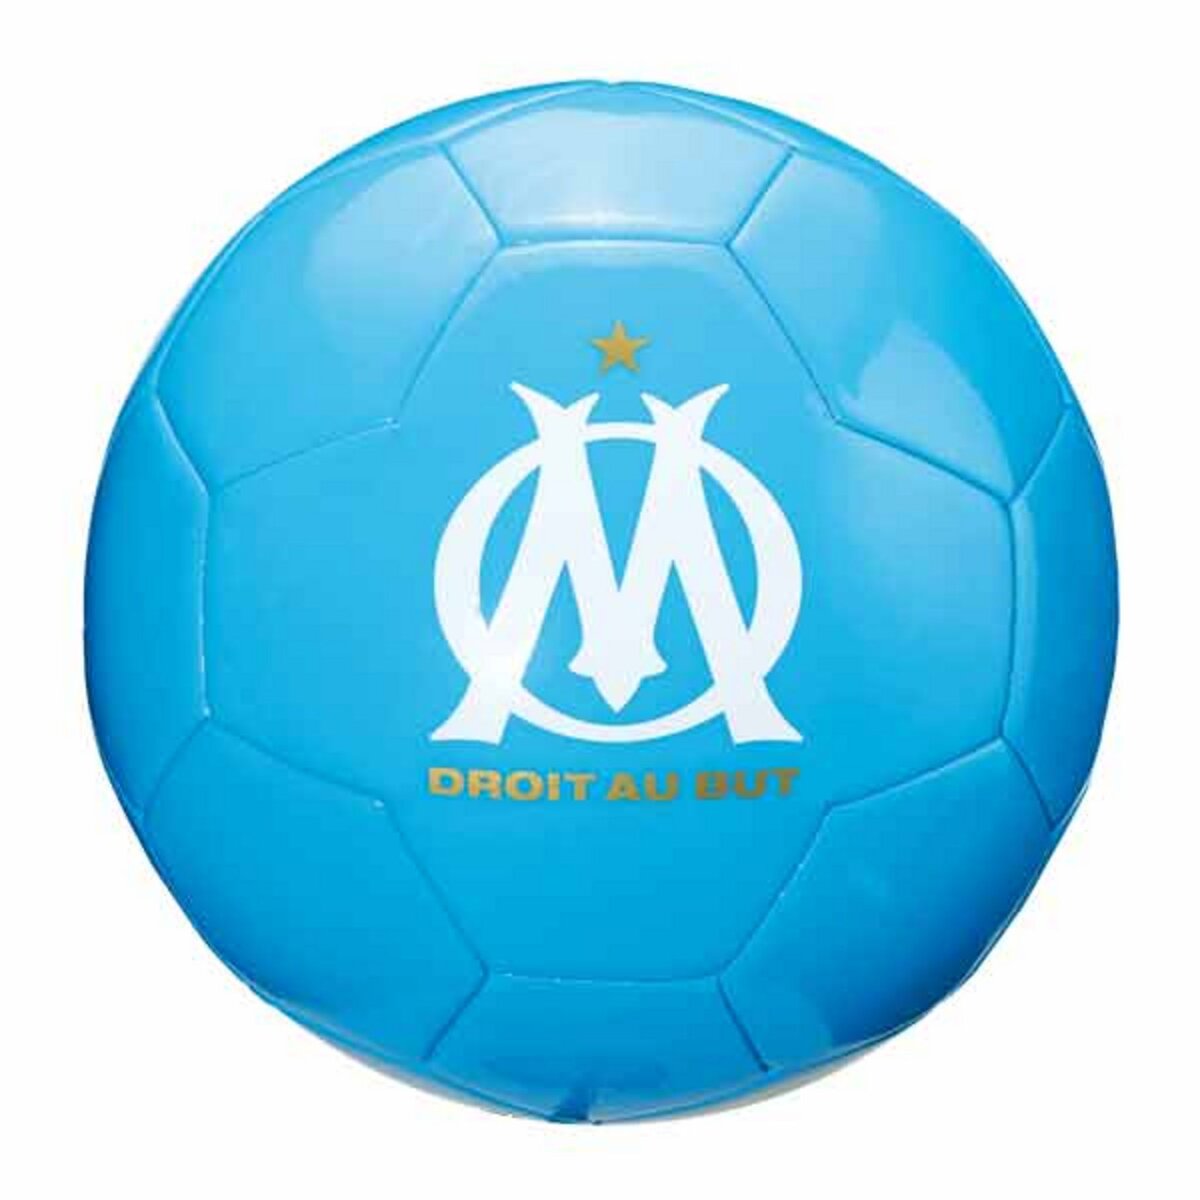 Ballon football OM